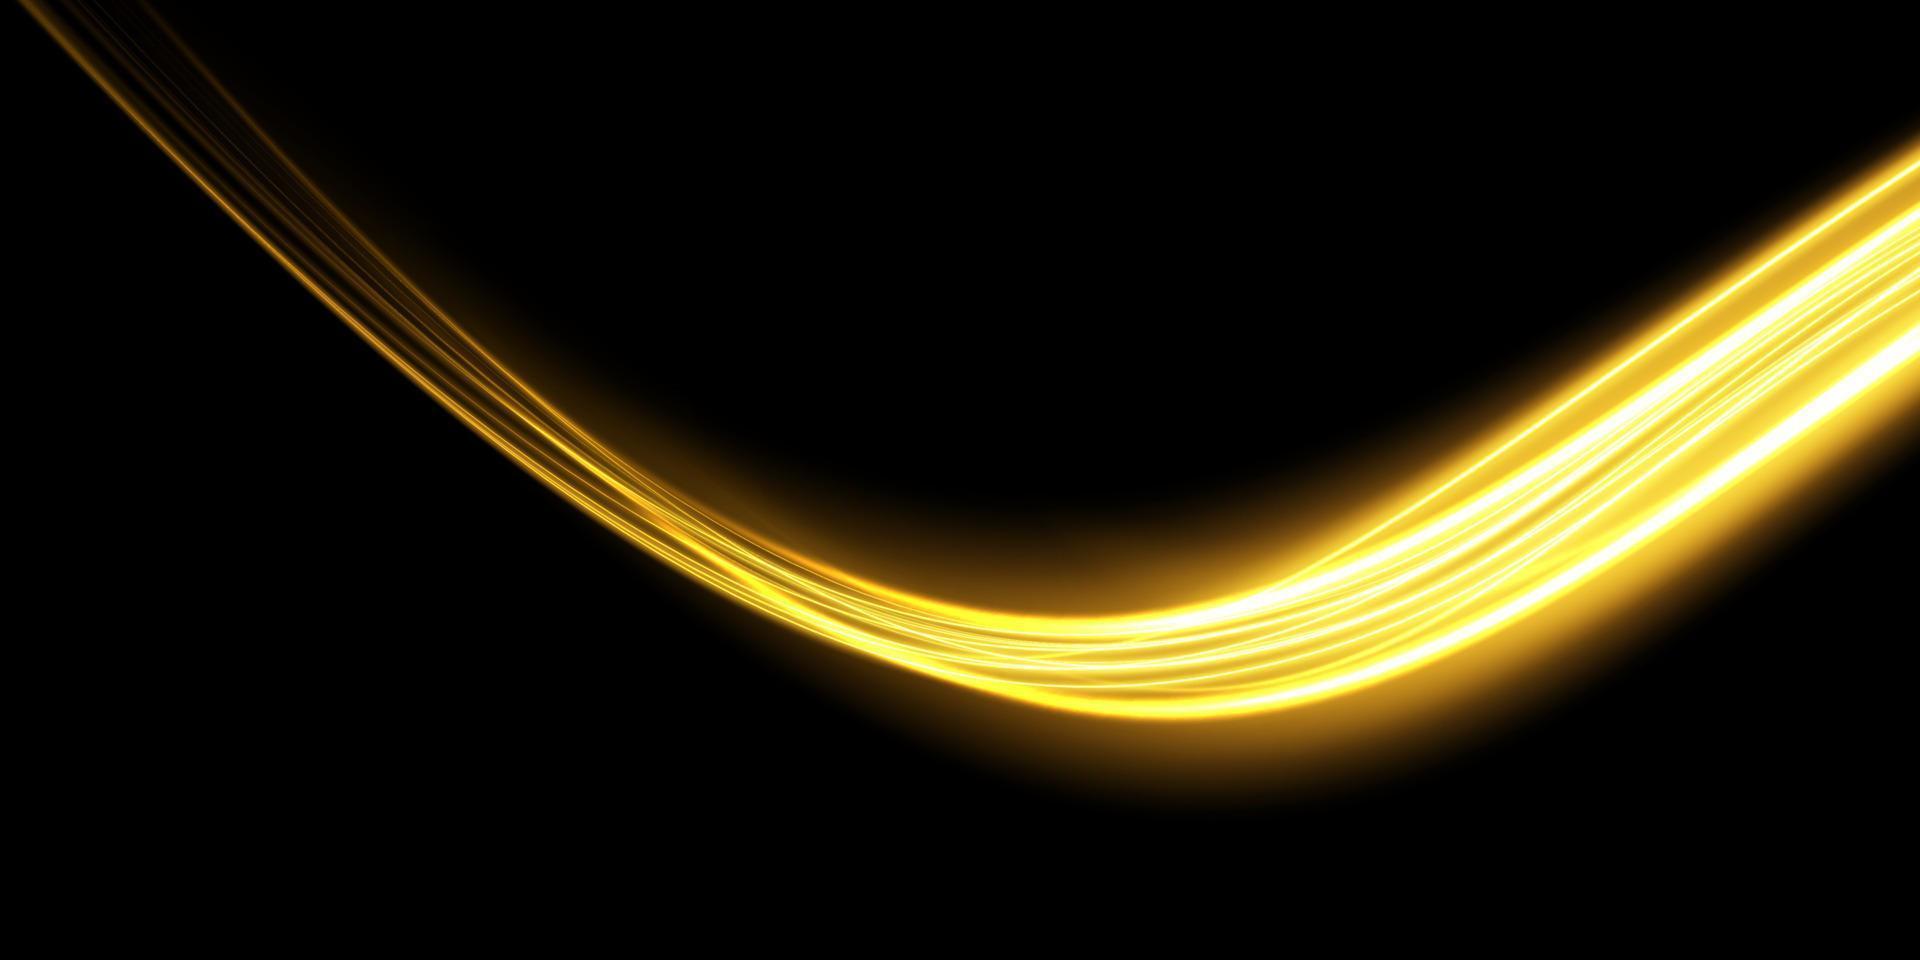 abstrato luz linhas do movimento e Rapidez dentro dourado cor. luz todo dia brilhando efeito. semicircular aceno, luz trilha curva redemoinho vetor